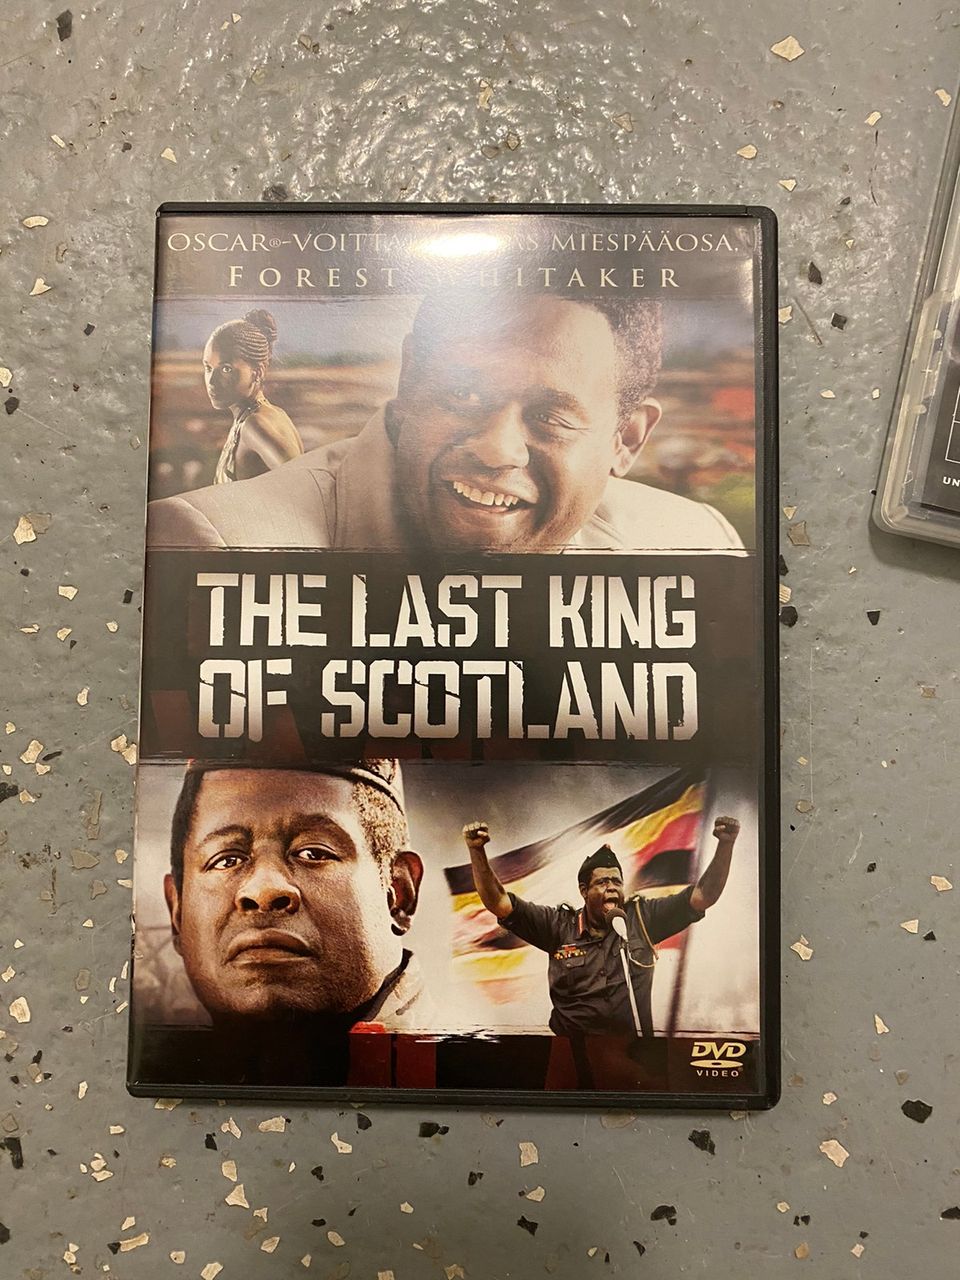 The last king of scotland dvd